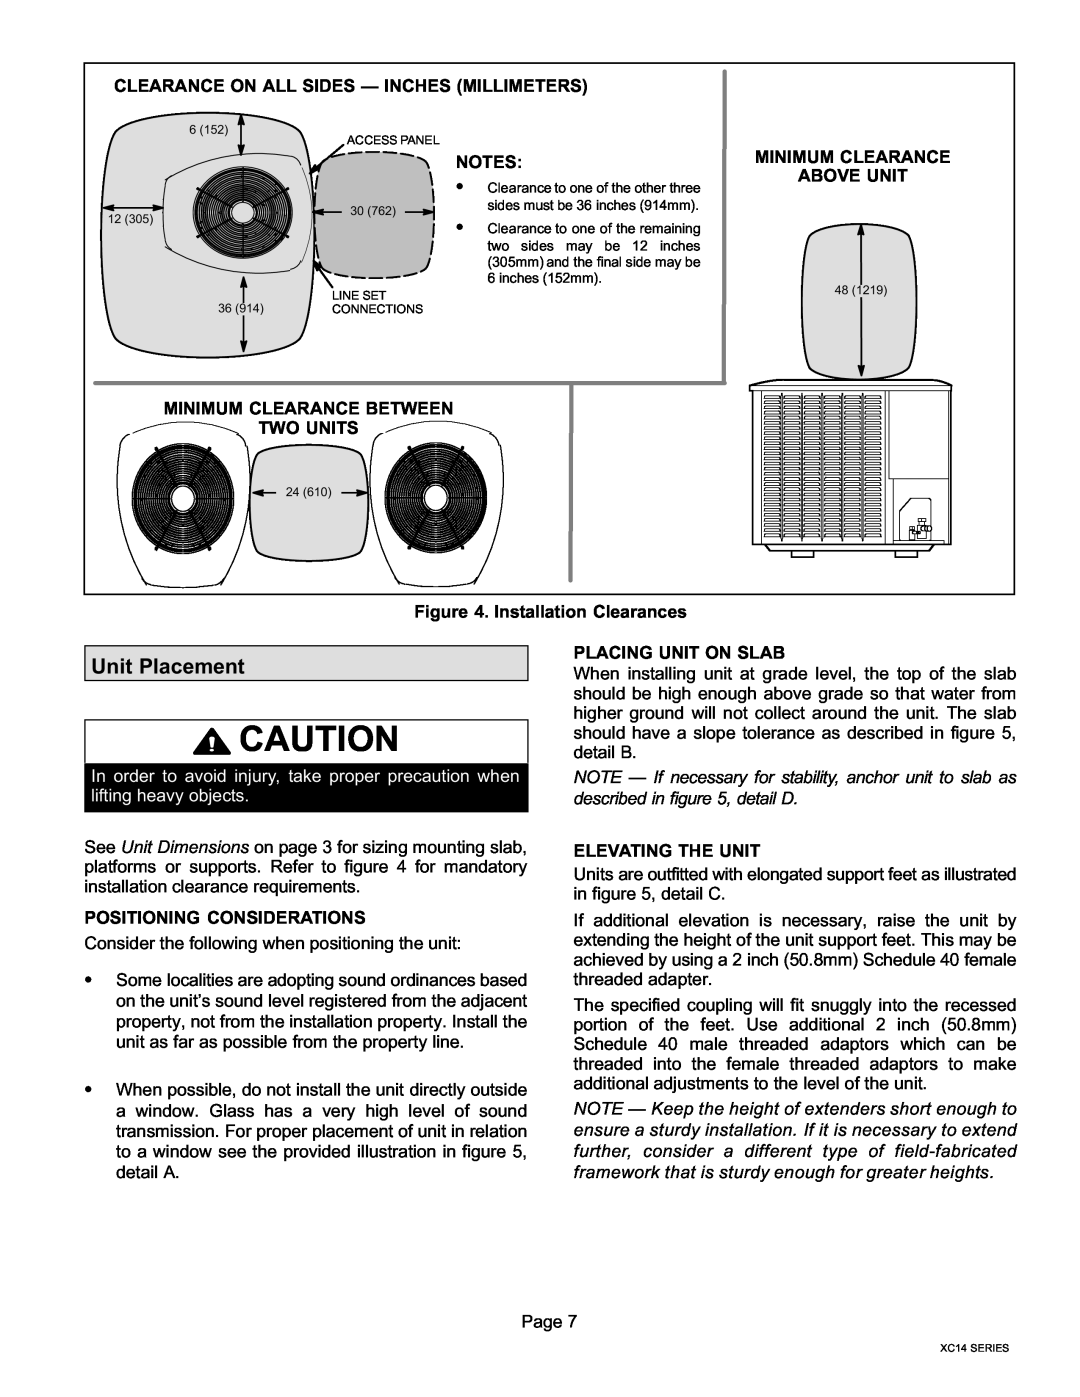 Lenox Elite Series, XC14 installation instructions Unit Placement 